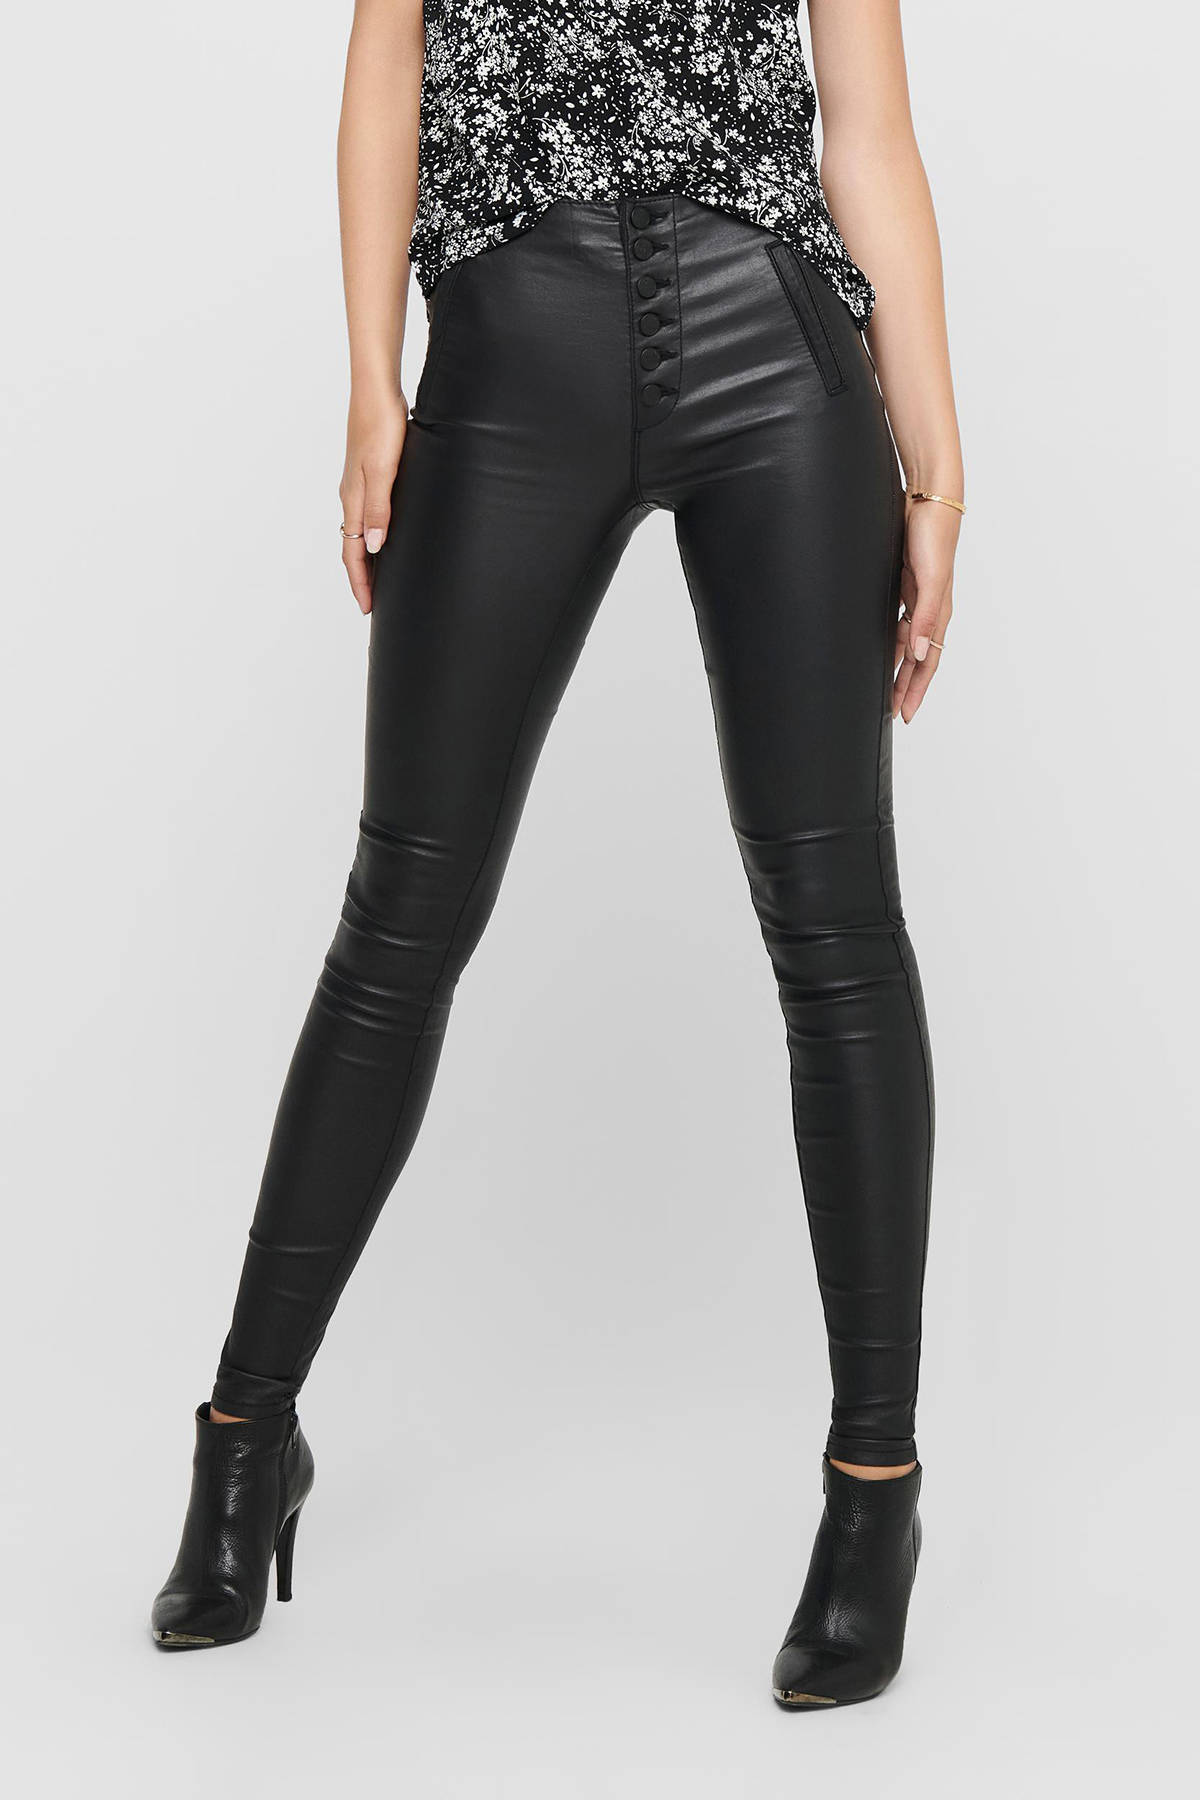 wehkamp Dames Kleding Broeken & Jeans Jeans High Waisted Jeans Coated high waist skinny broek ONLROYAL zwart 